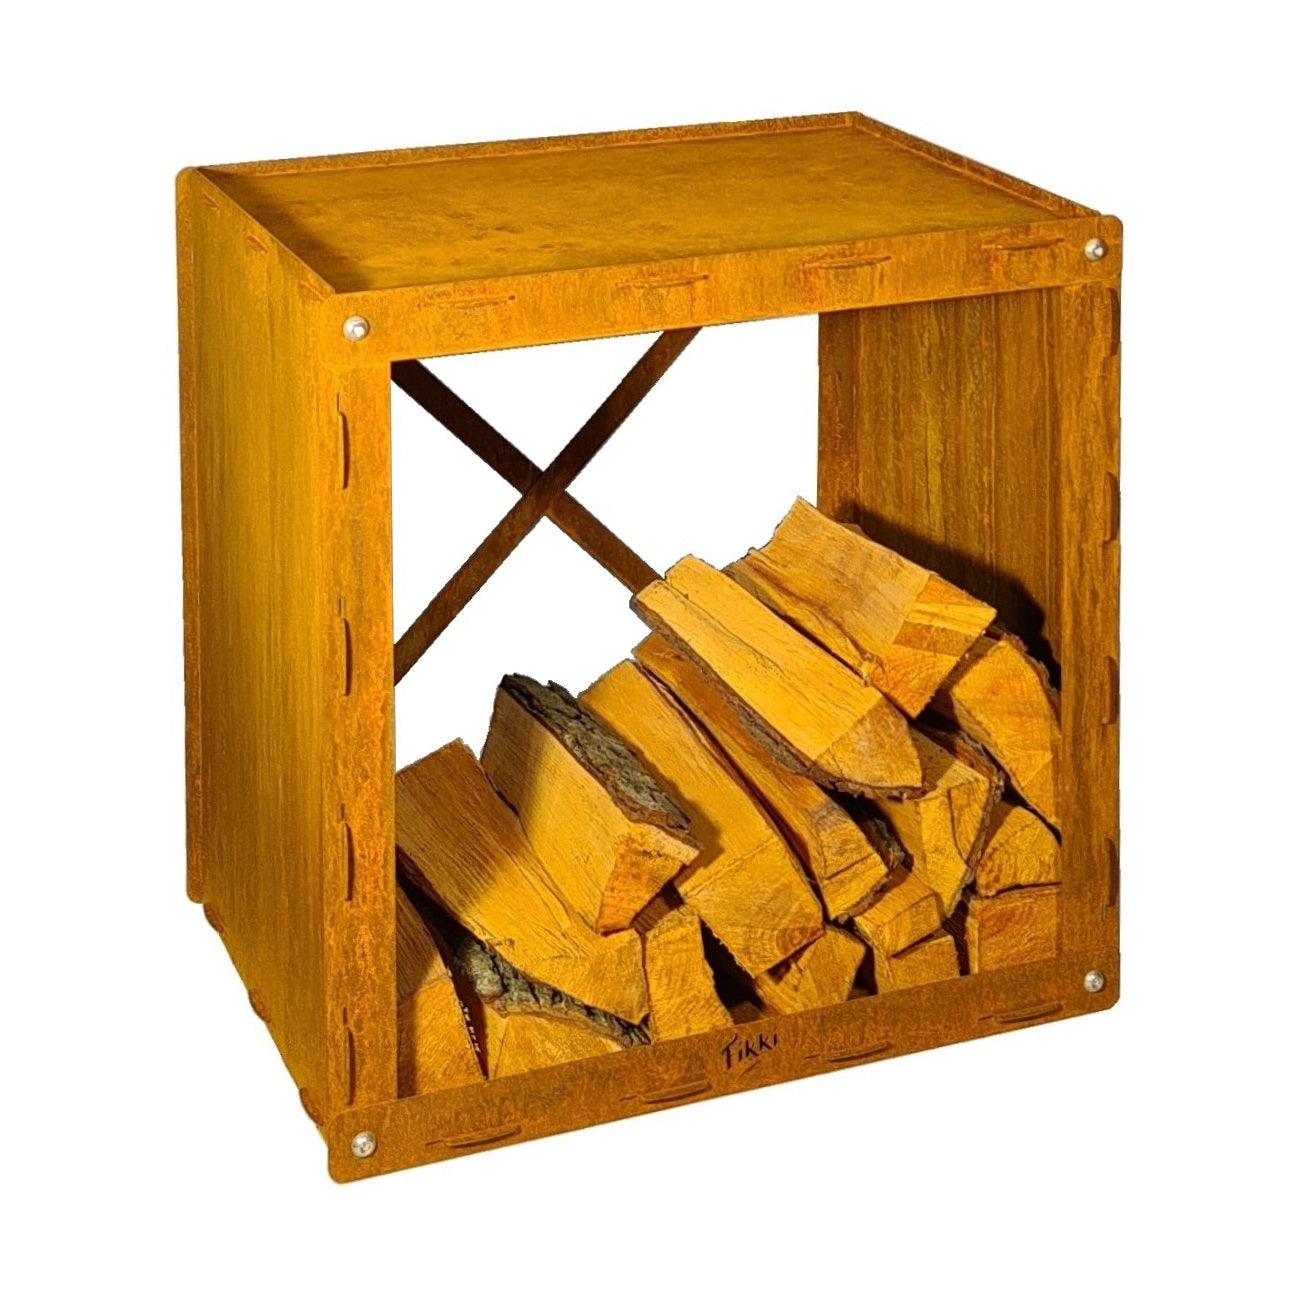 Fikki Wood Storage Box